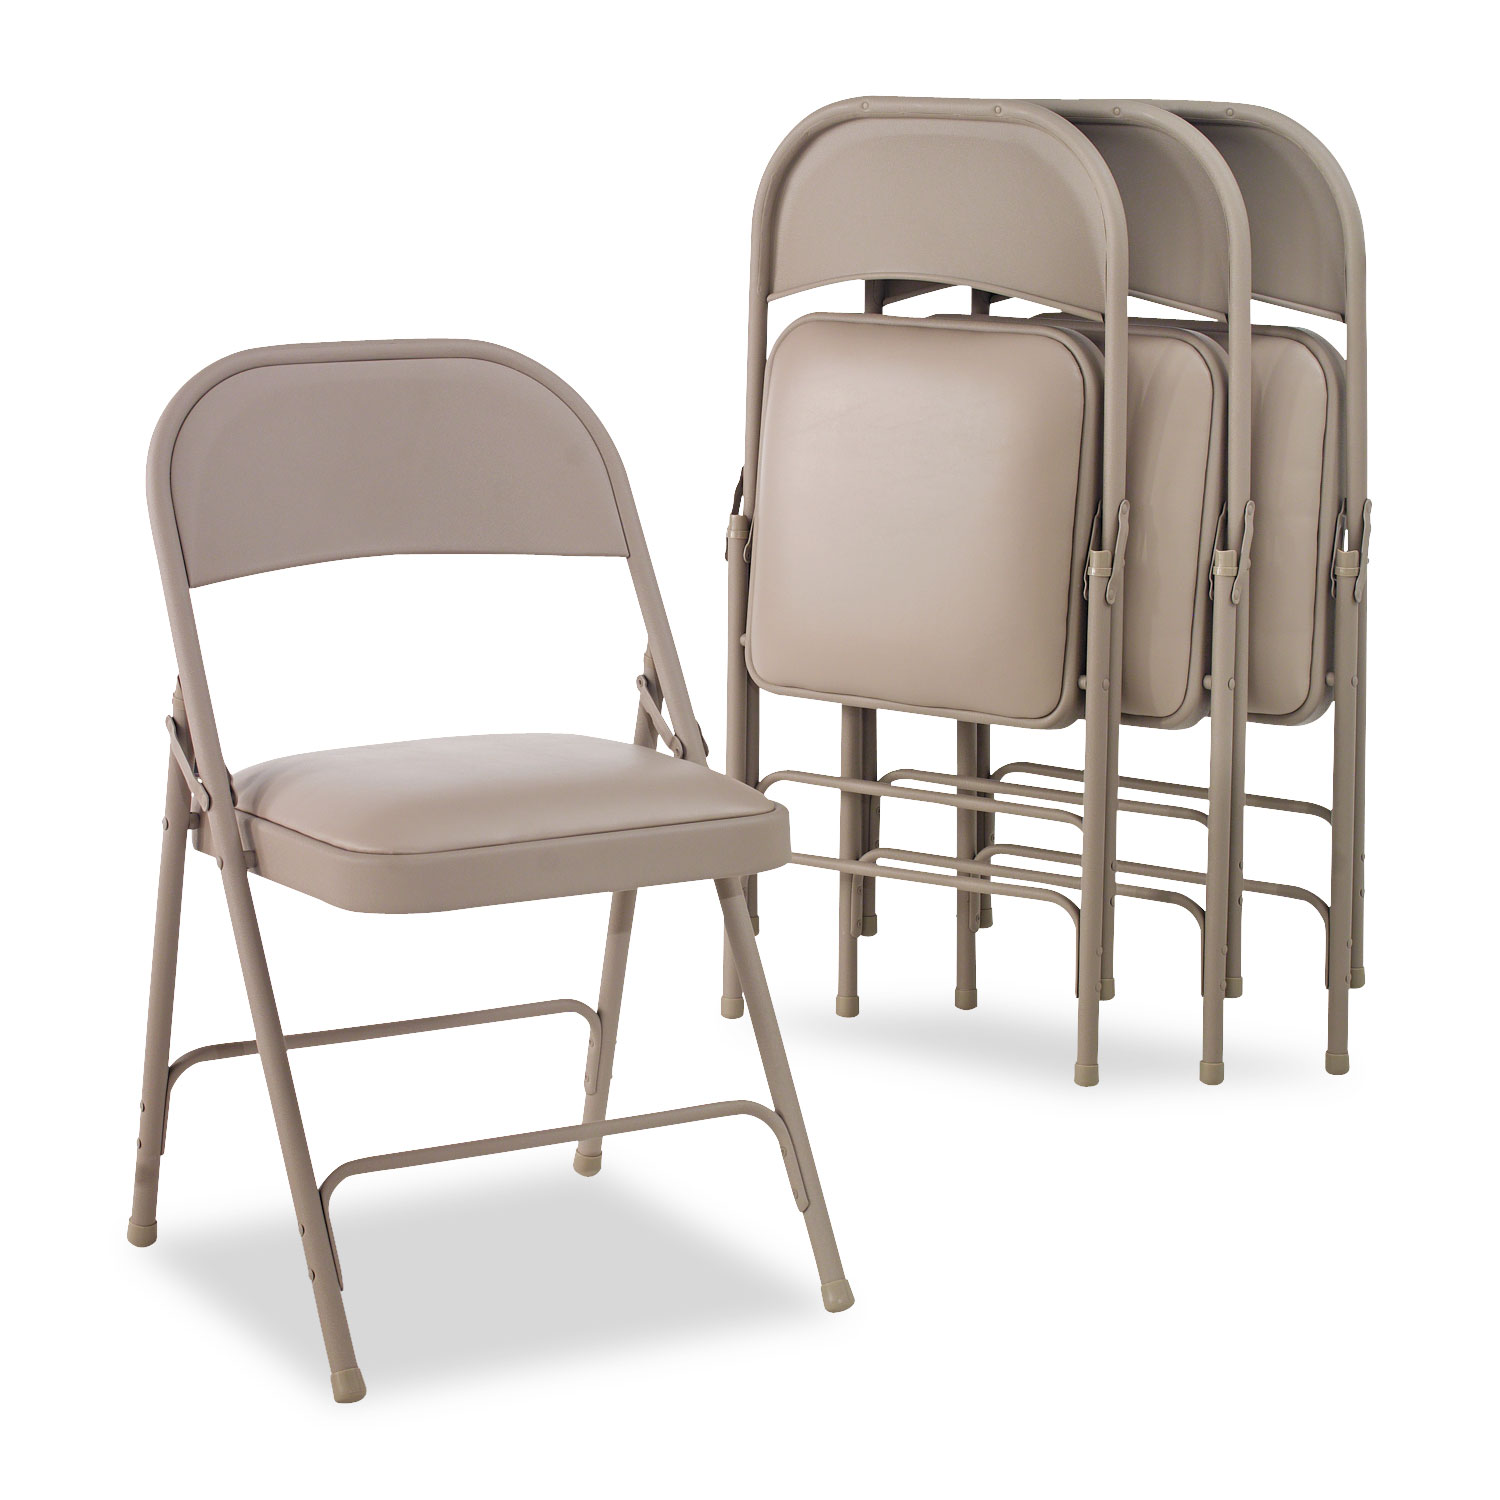 Steel Folding Chair with Two-Brace Support, Tan Seat/Tan Back, Tan Base, 4/Carton